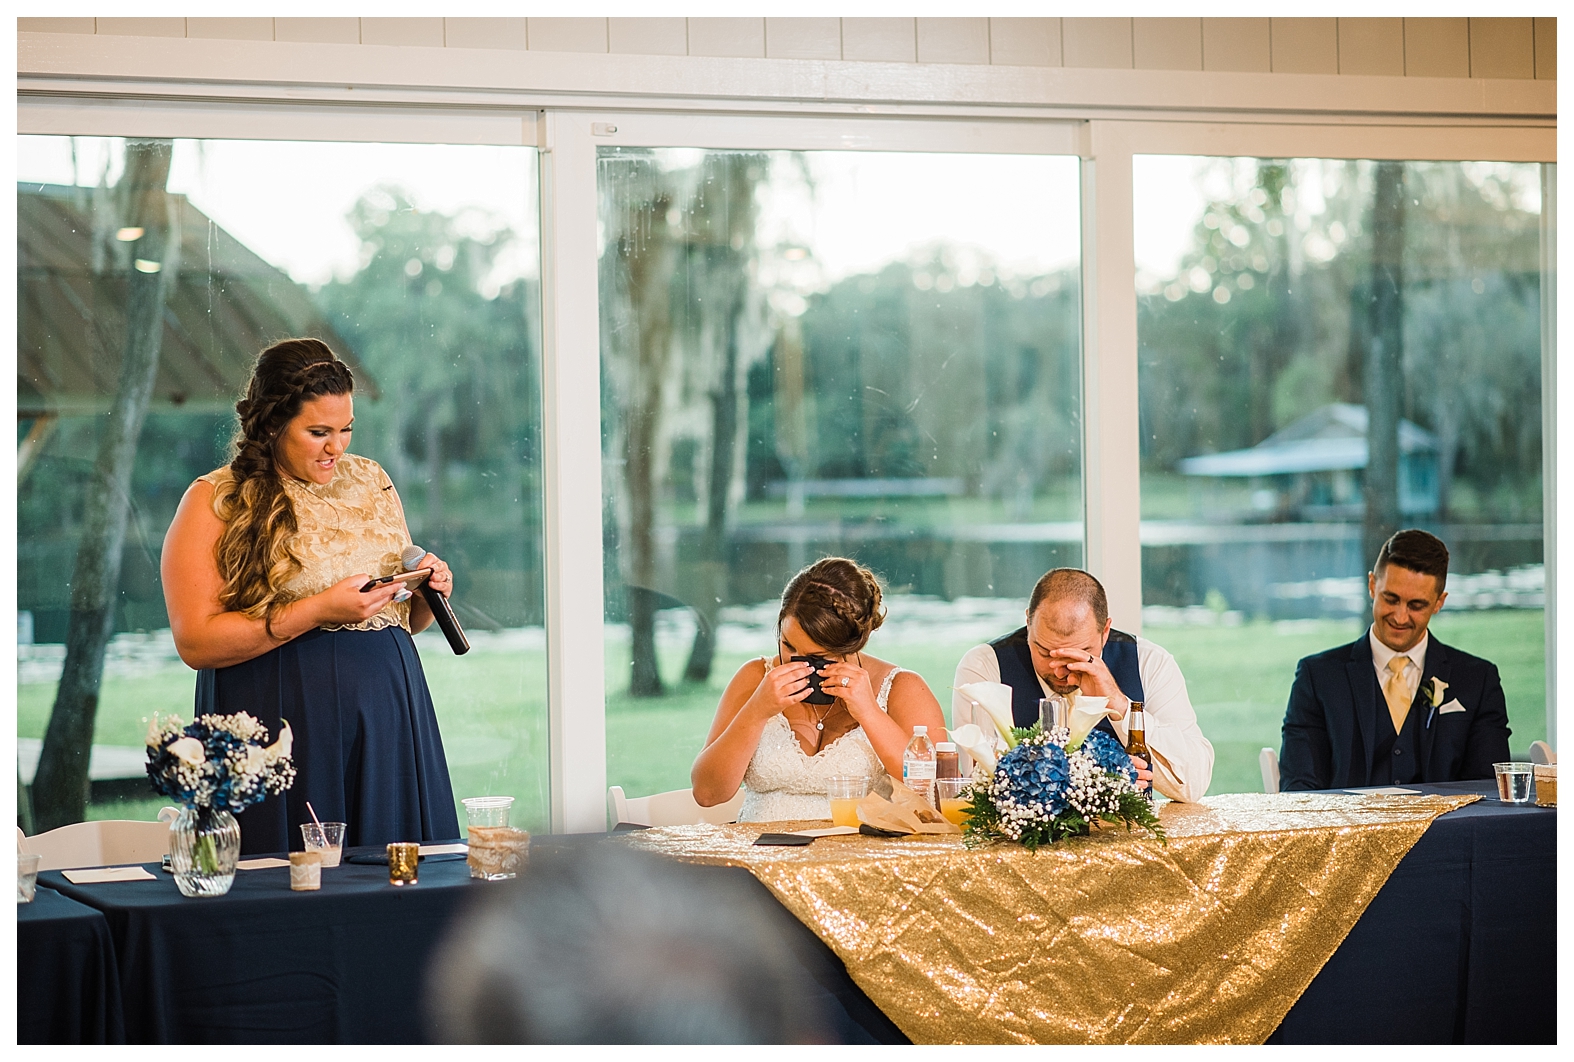 Emotional Toast Photography - Sara and Chad - Tampa Wedding Photographer